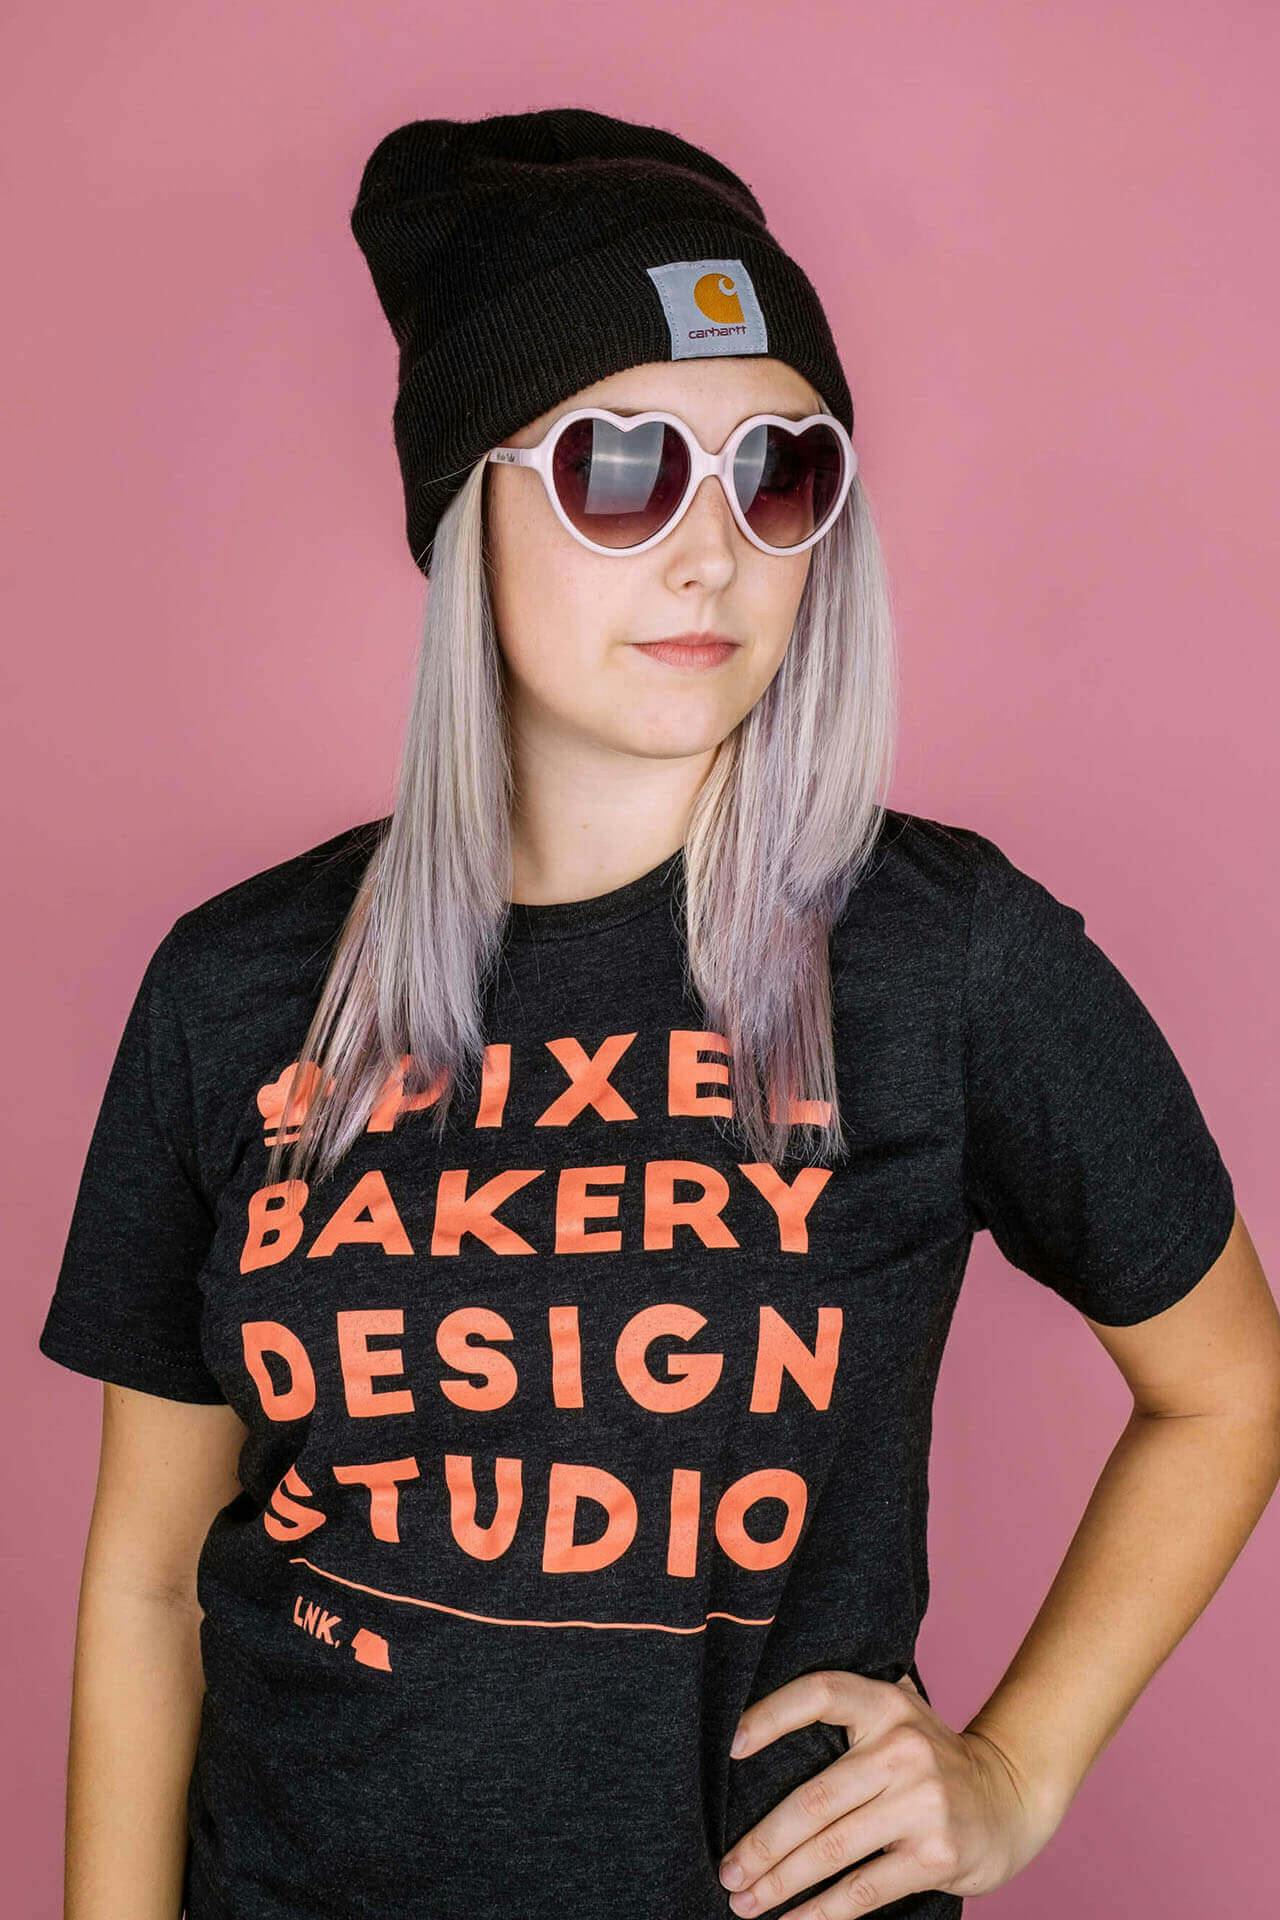 Karley Johnson, co-founder at Pixel Bakery Design Studio